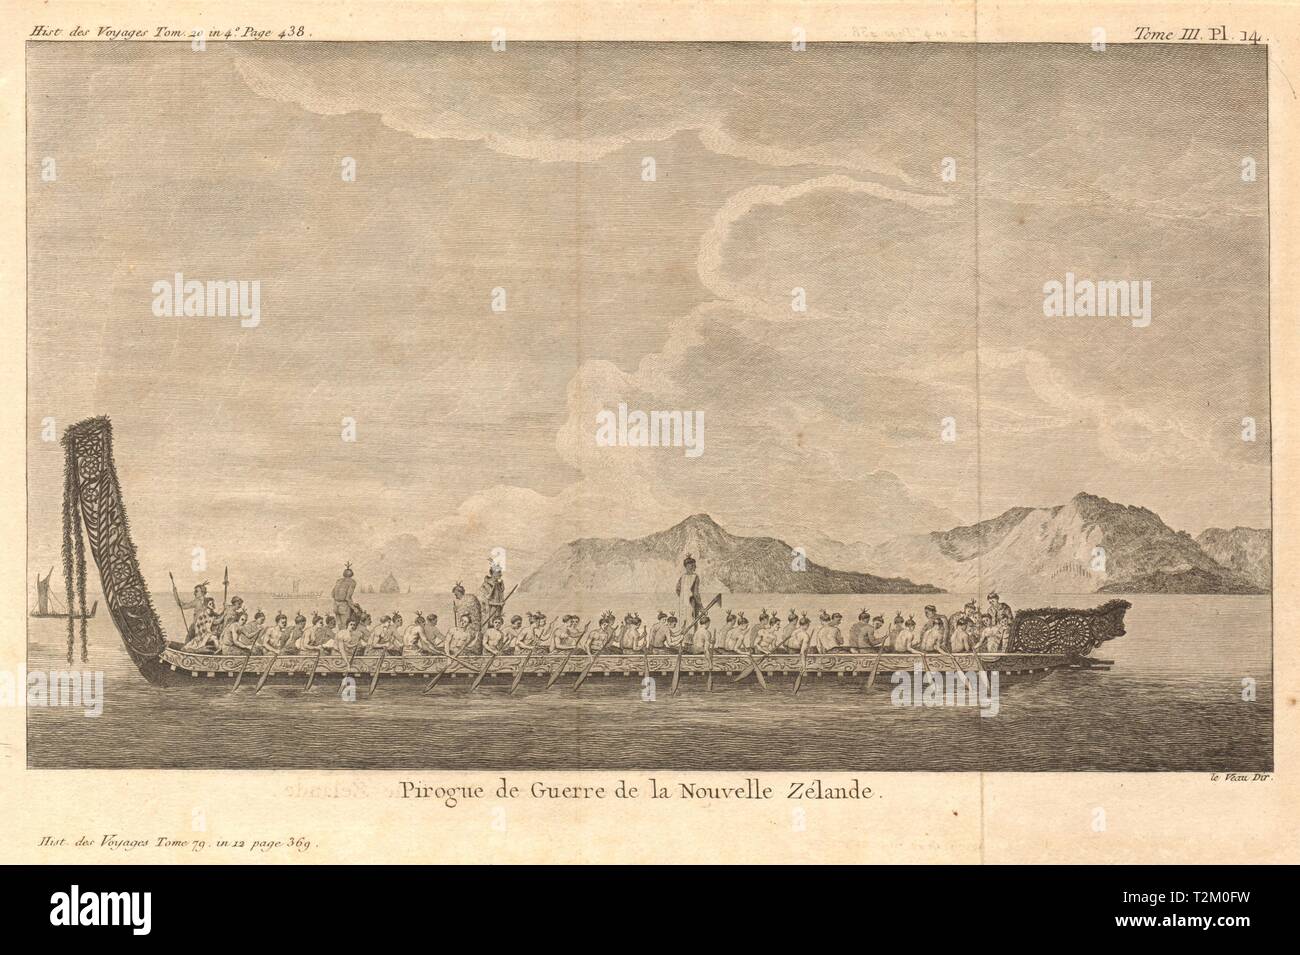 Pirogue de Guerre de la Nouvelle Zélande. Maori Waka war canoe, New Zealand 1789 Stock Photo